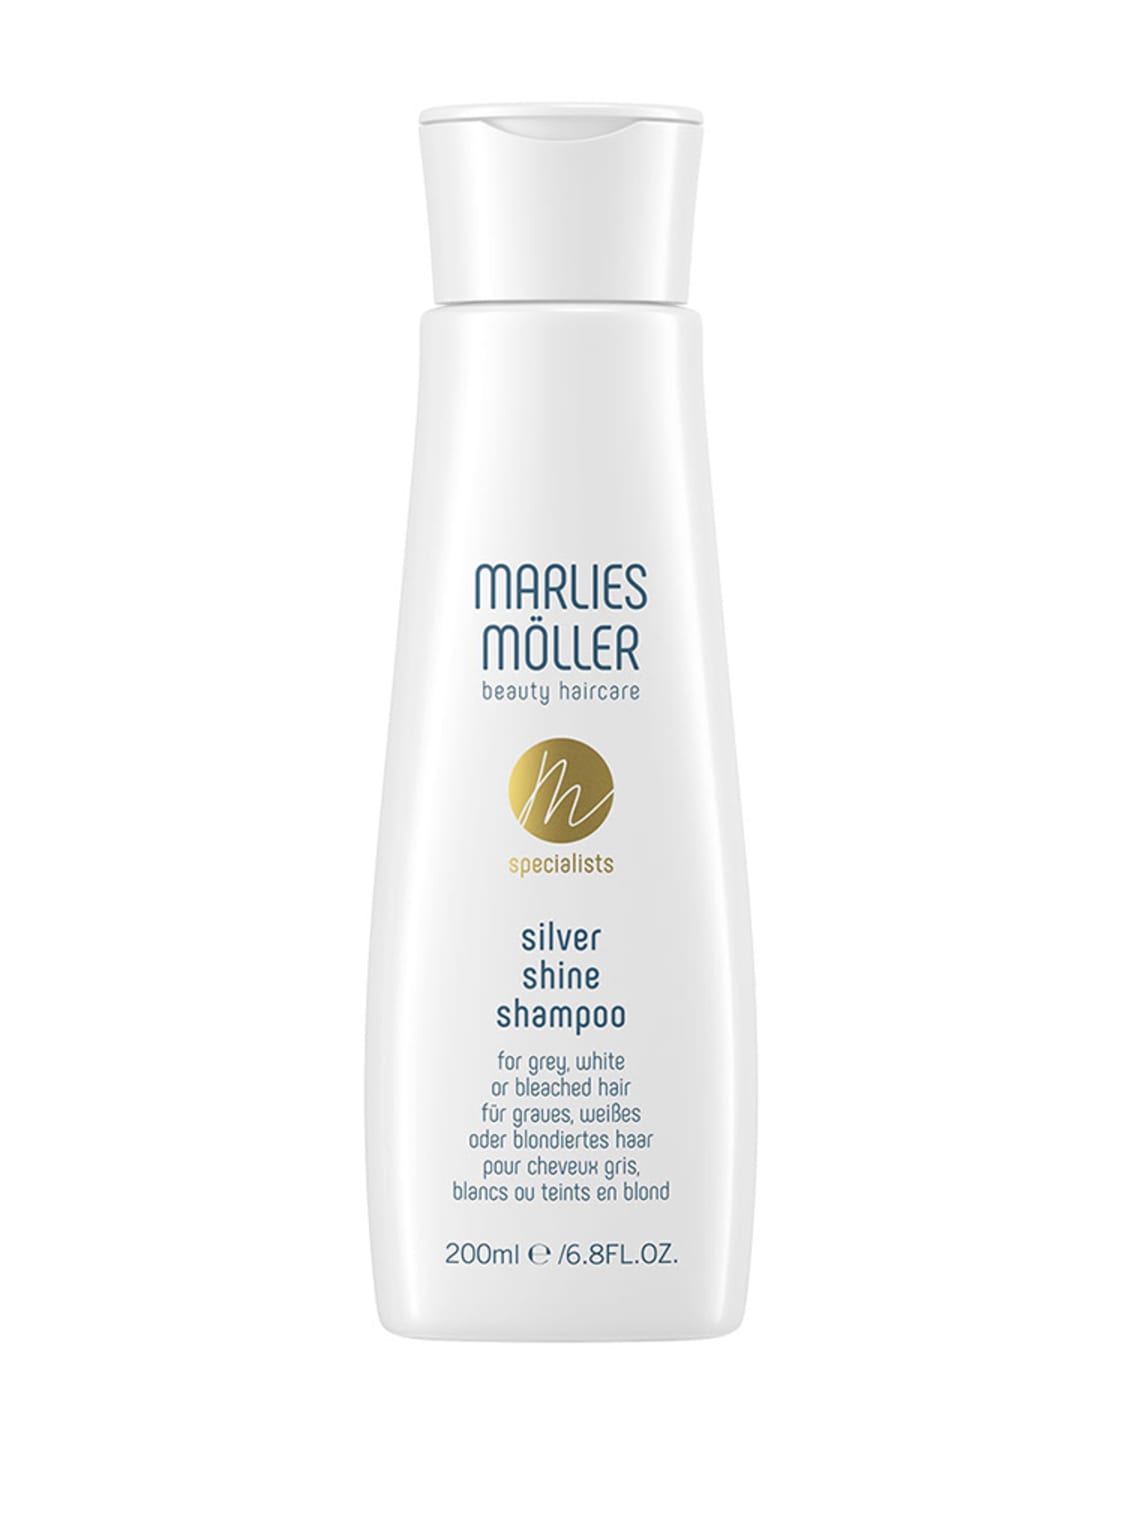 Marlies Möller Specialists Silver Shine Shampoo 200 ml von MARLIES MÖLLER